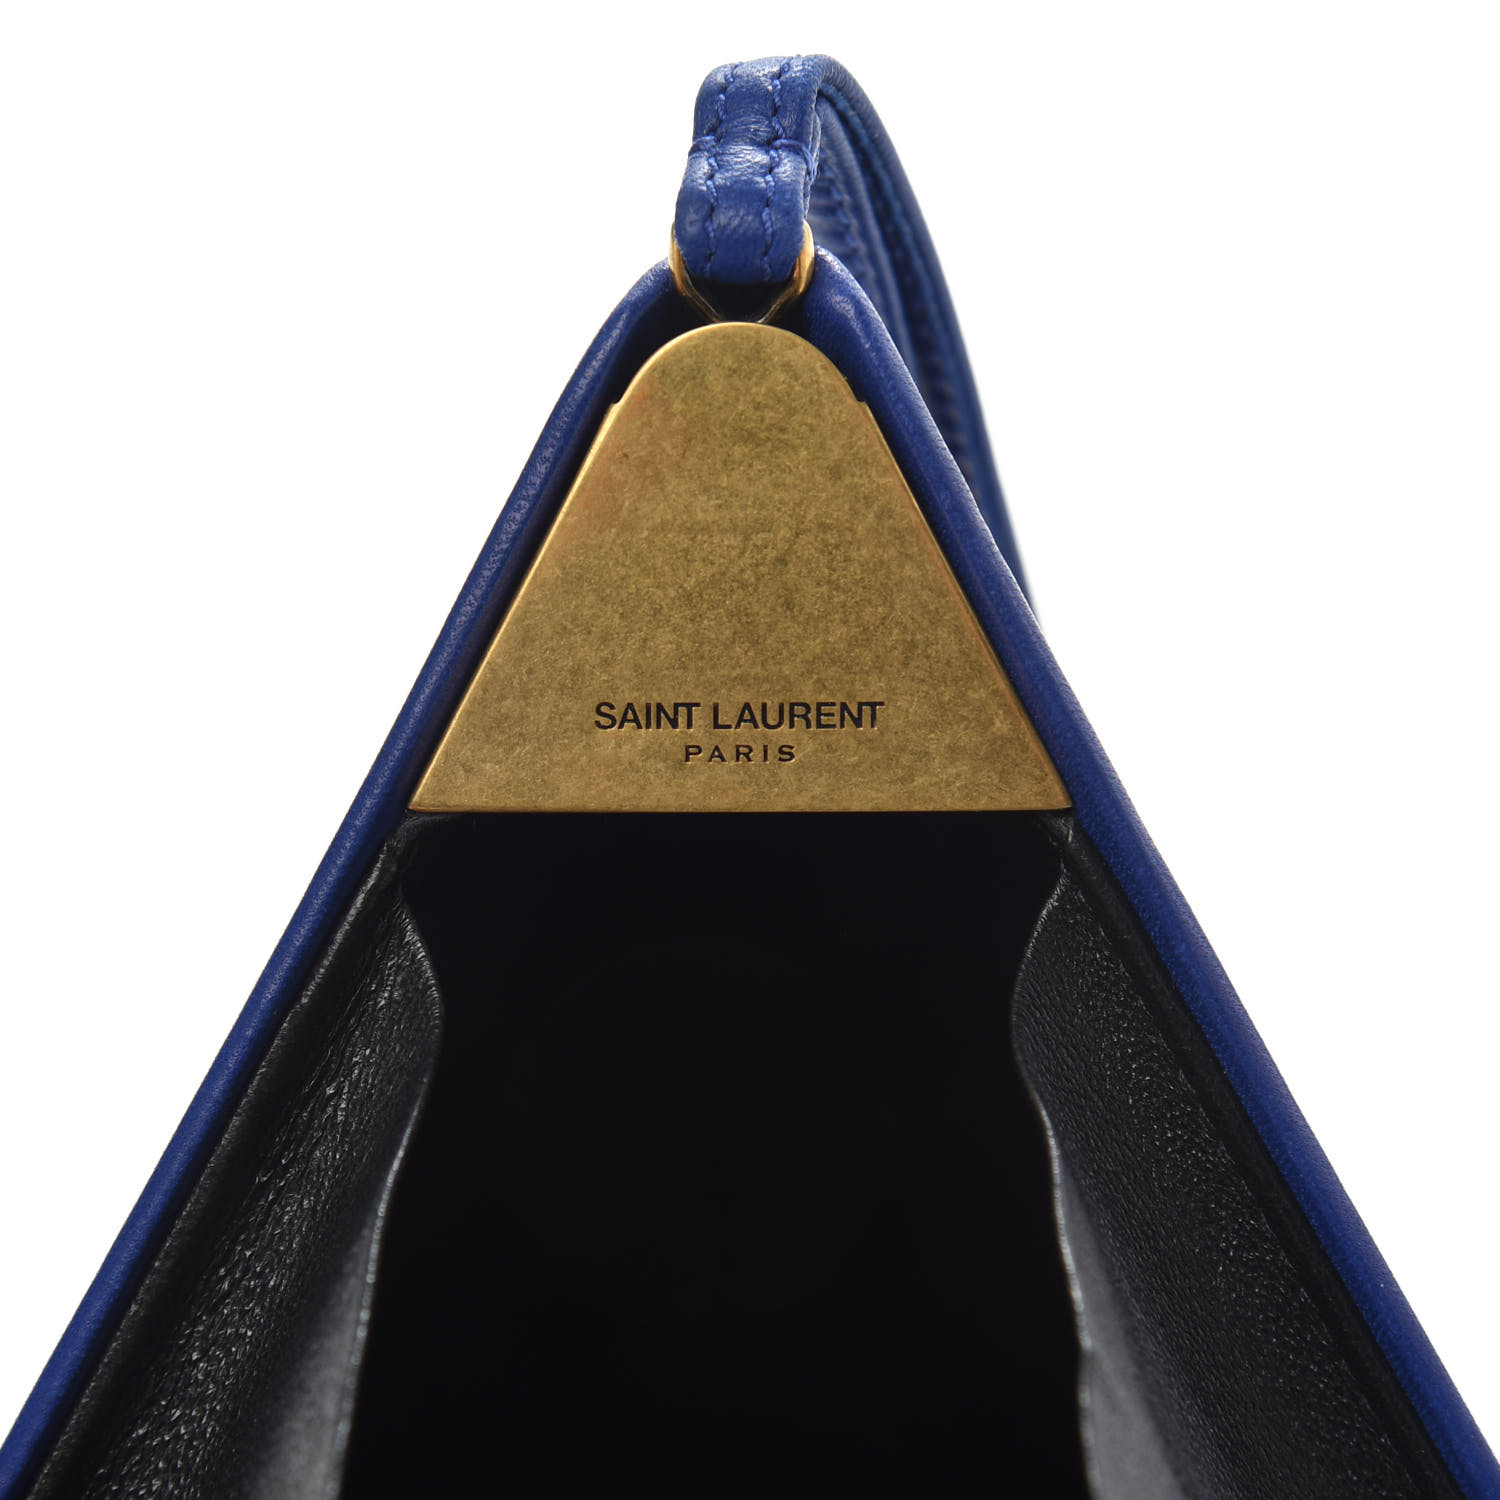 SAINT LAURENT Lambskin Pyramid Clutch Blue 714915 | FASHIONPHILE